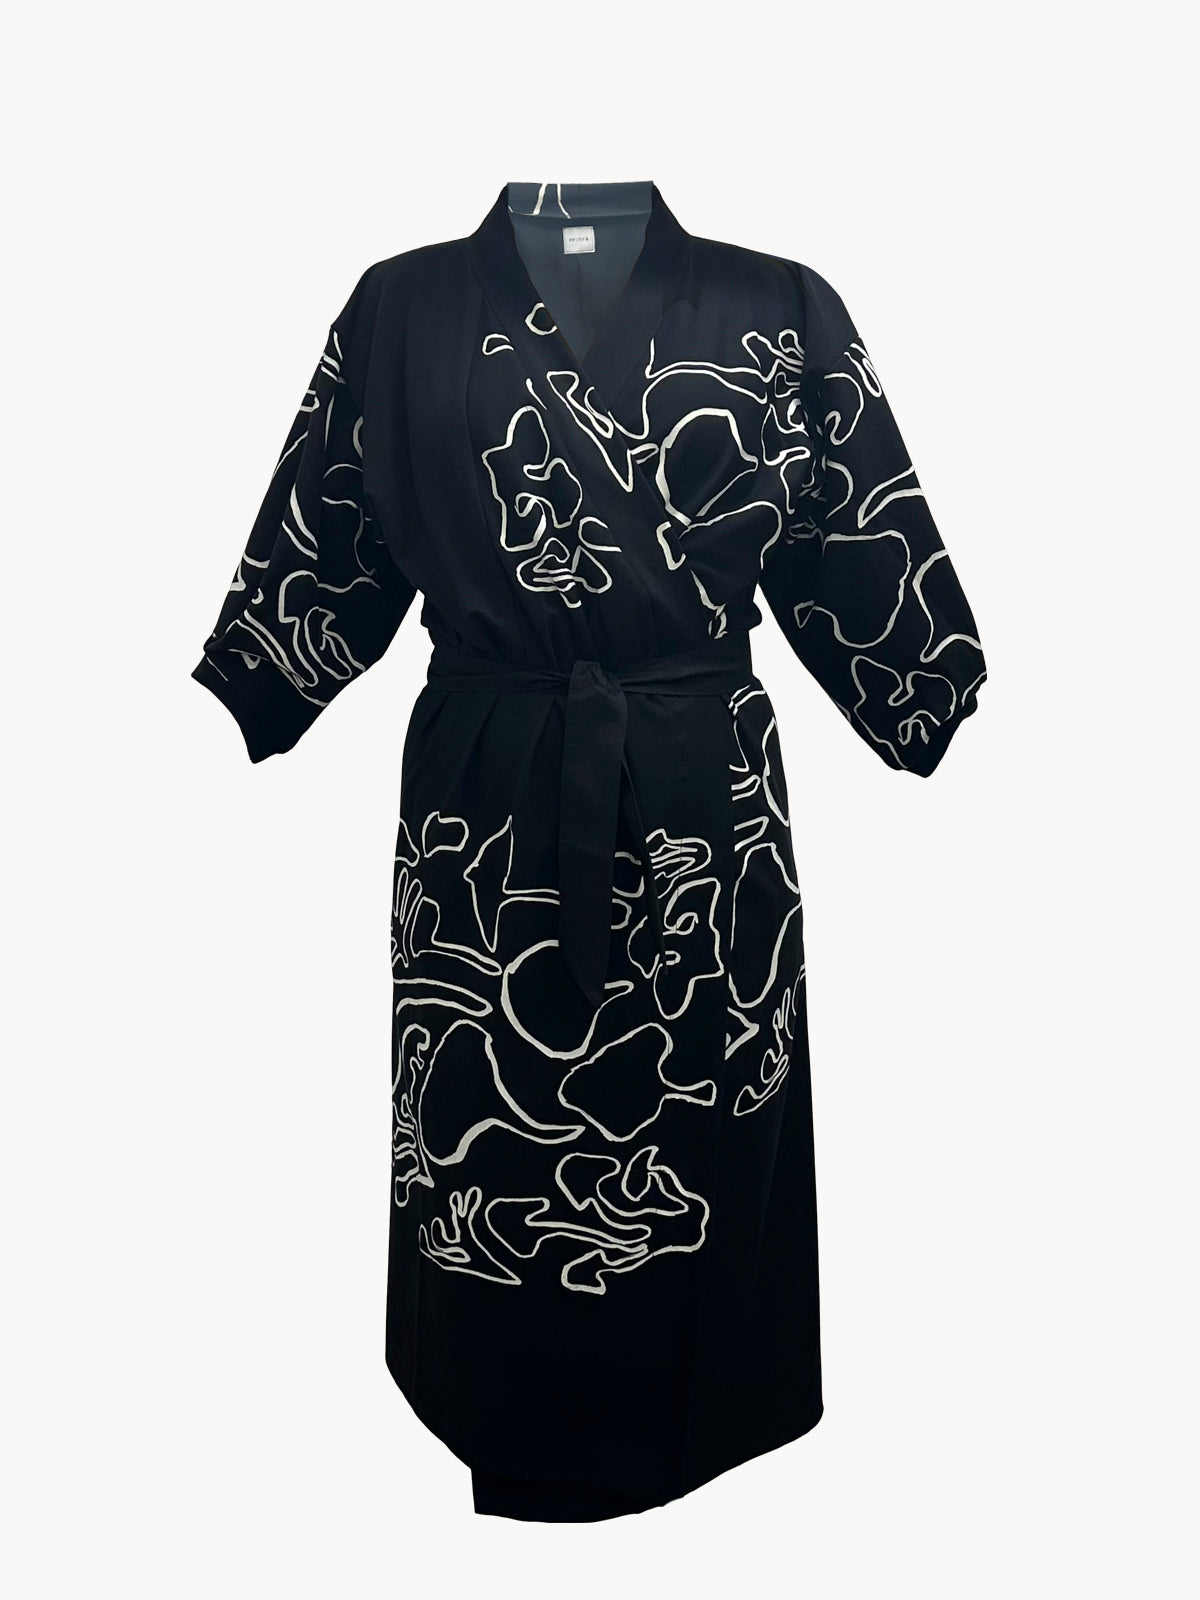 ZW Herbs Black Overlay Women's Dress